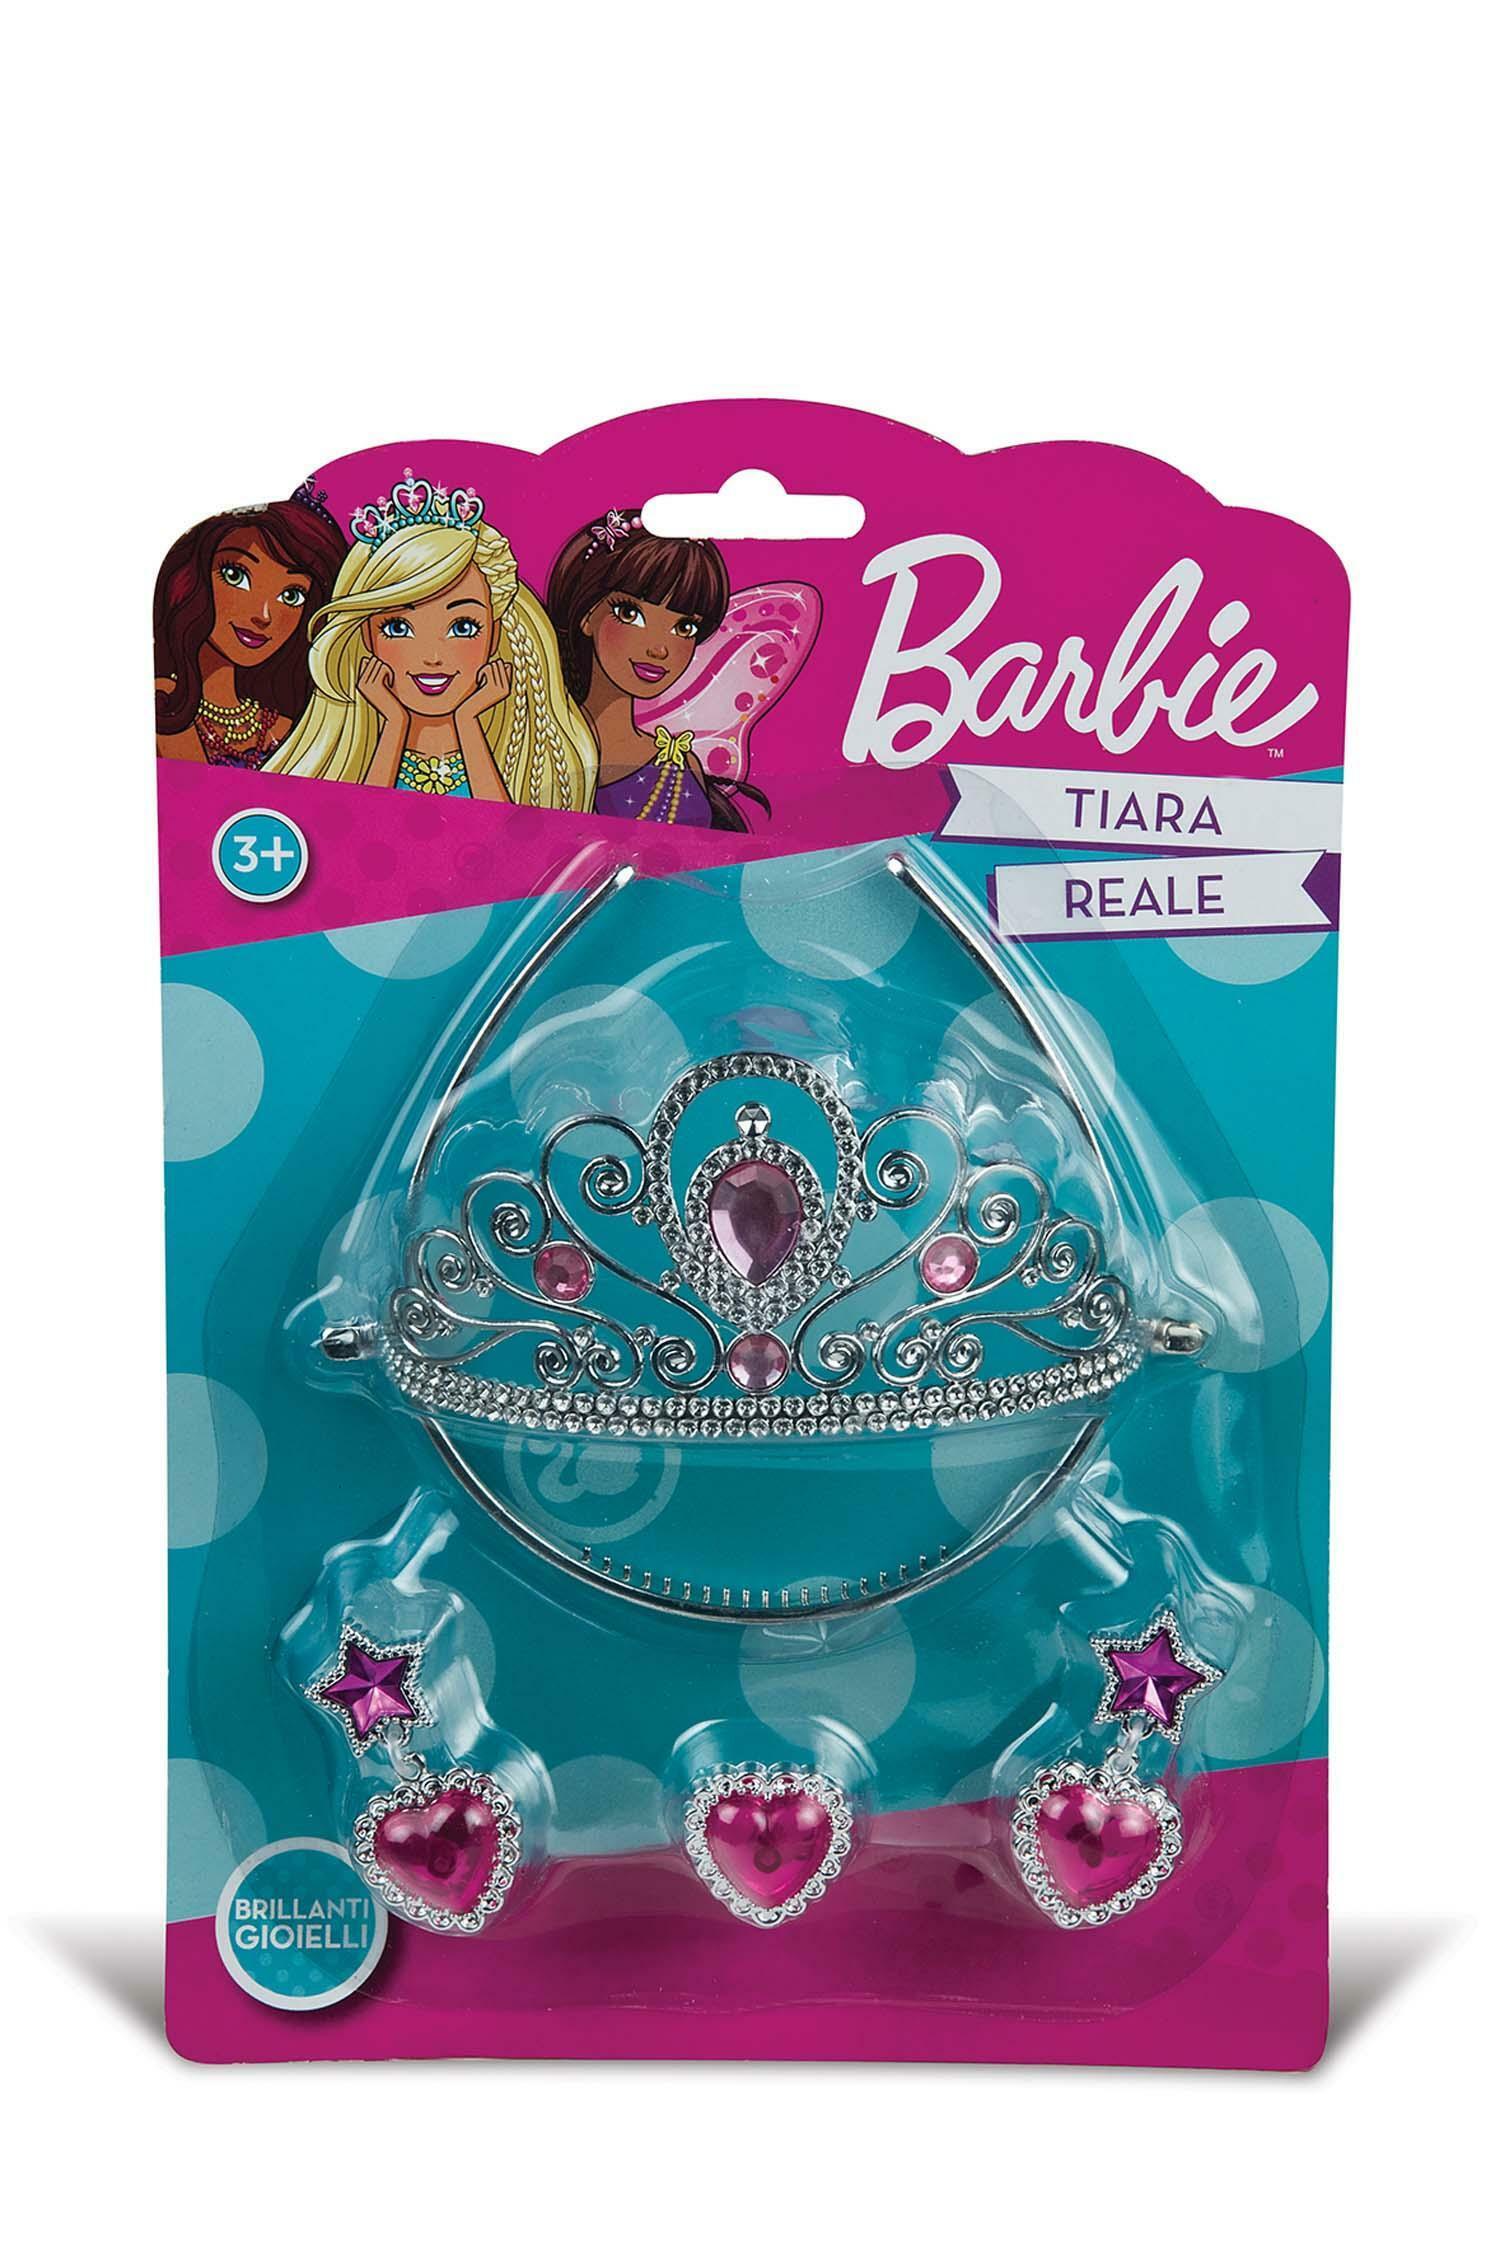 grandi giochi barbie tiara reale